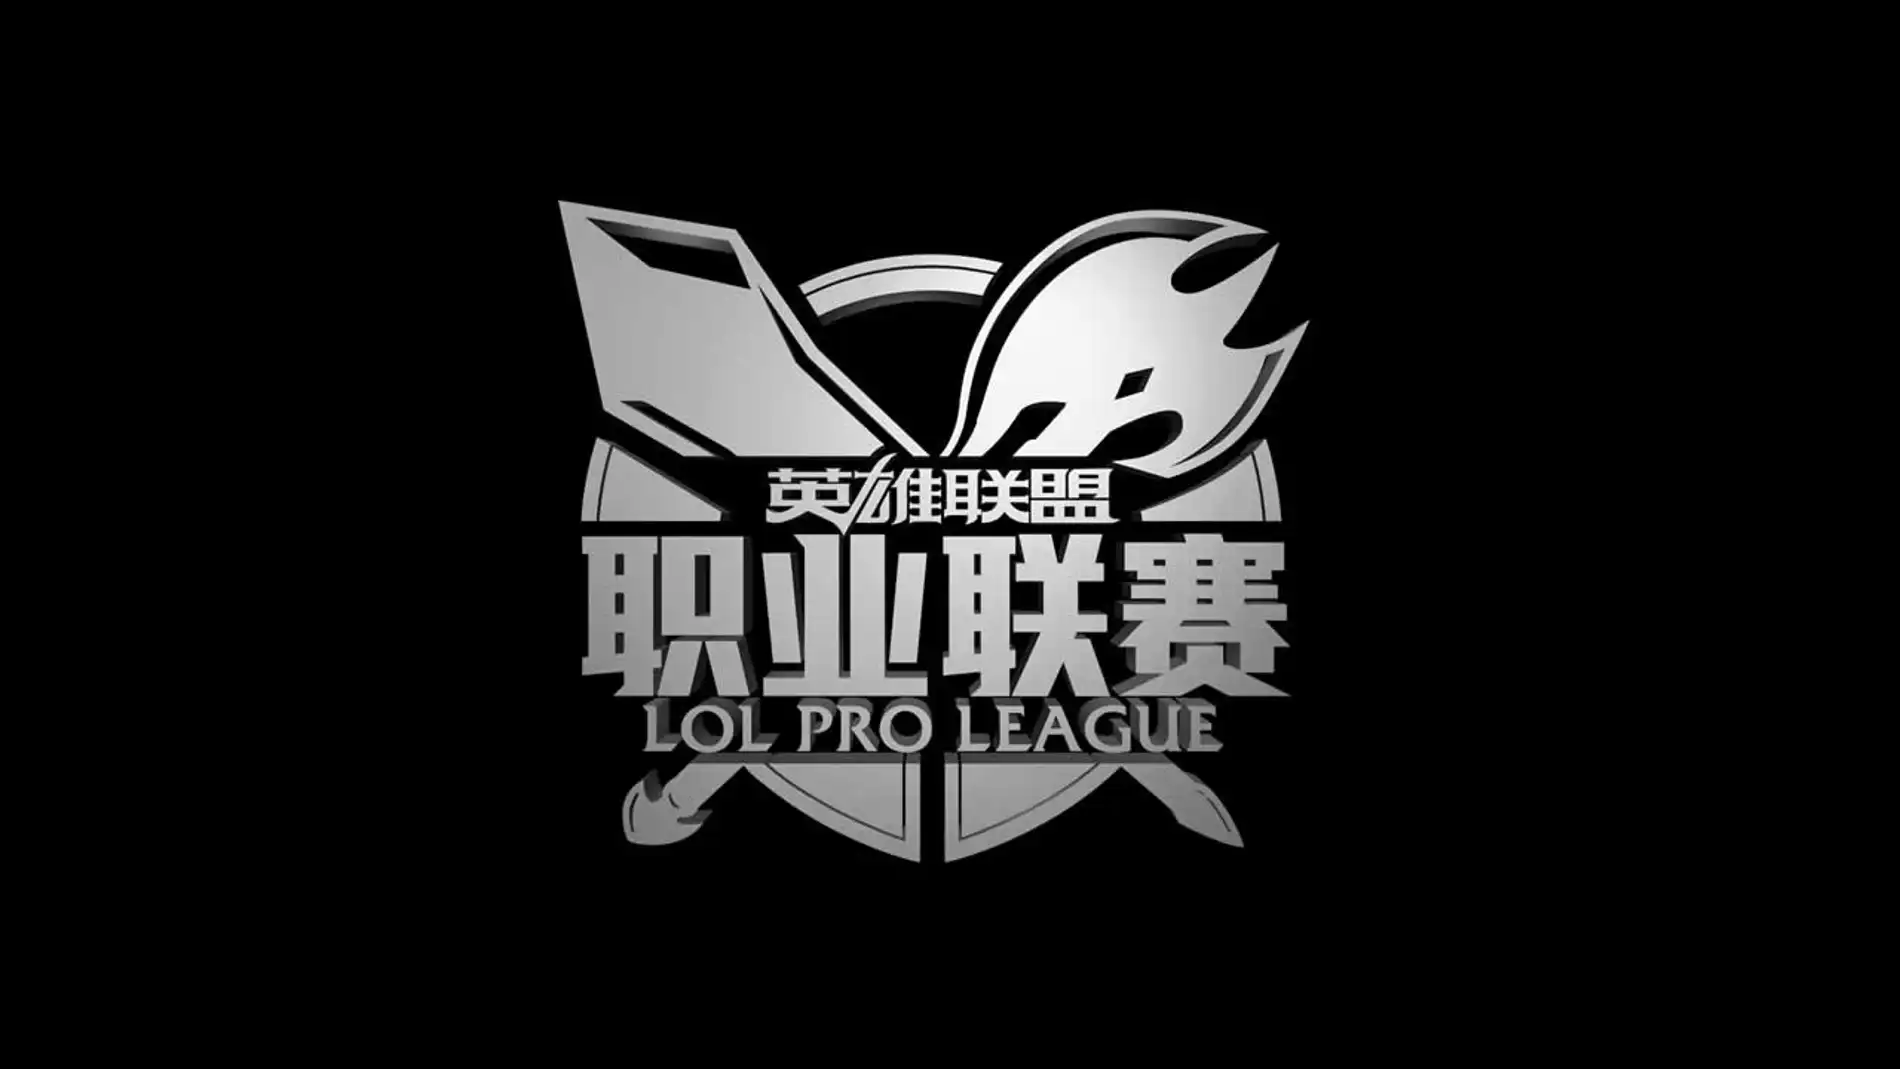 LOL Pro League